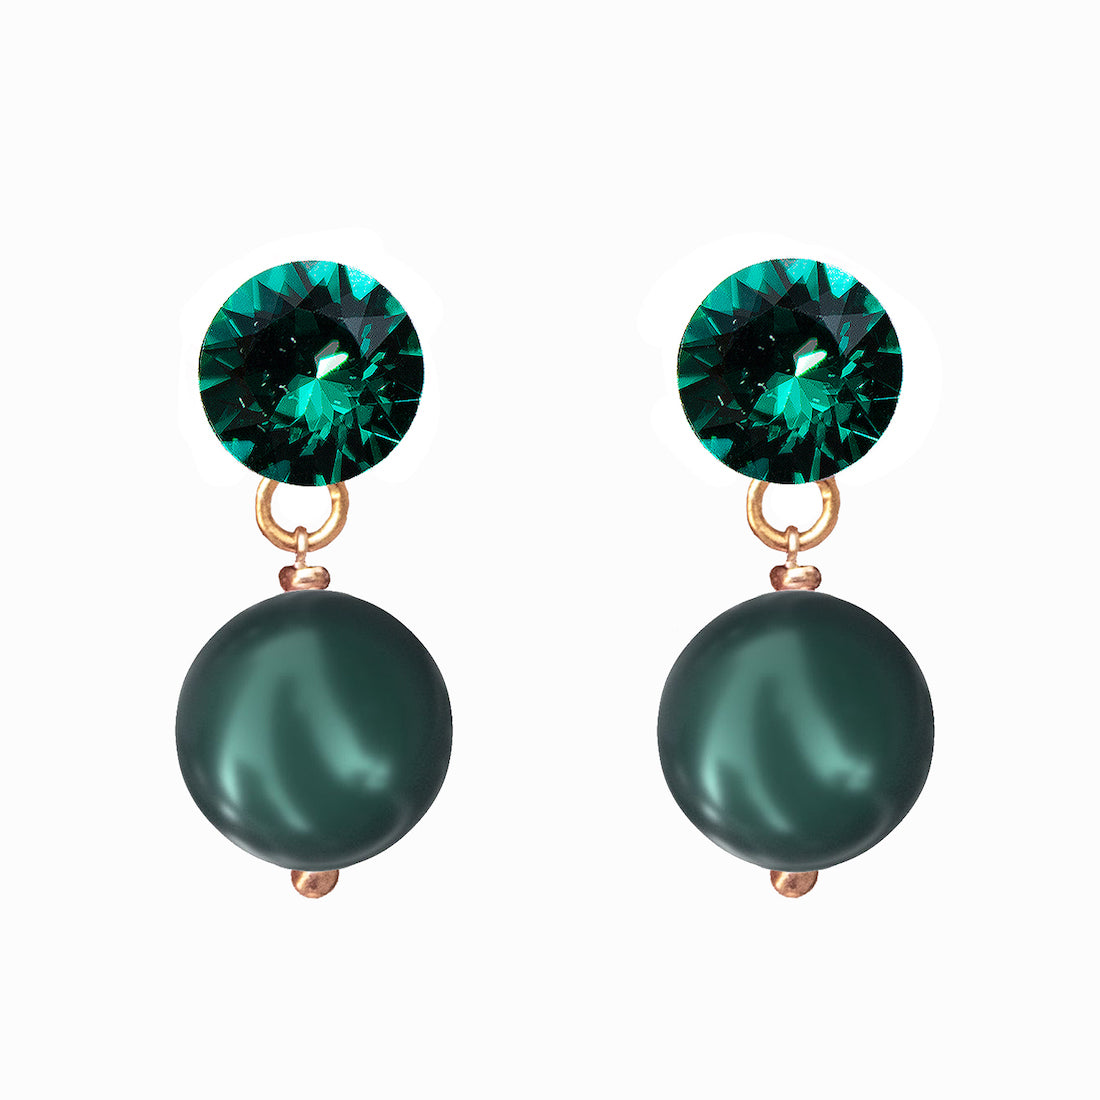 Nagliņauskari ar pērlēm un emeralda kristāliem